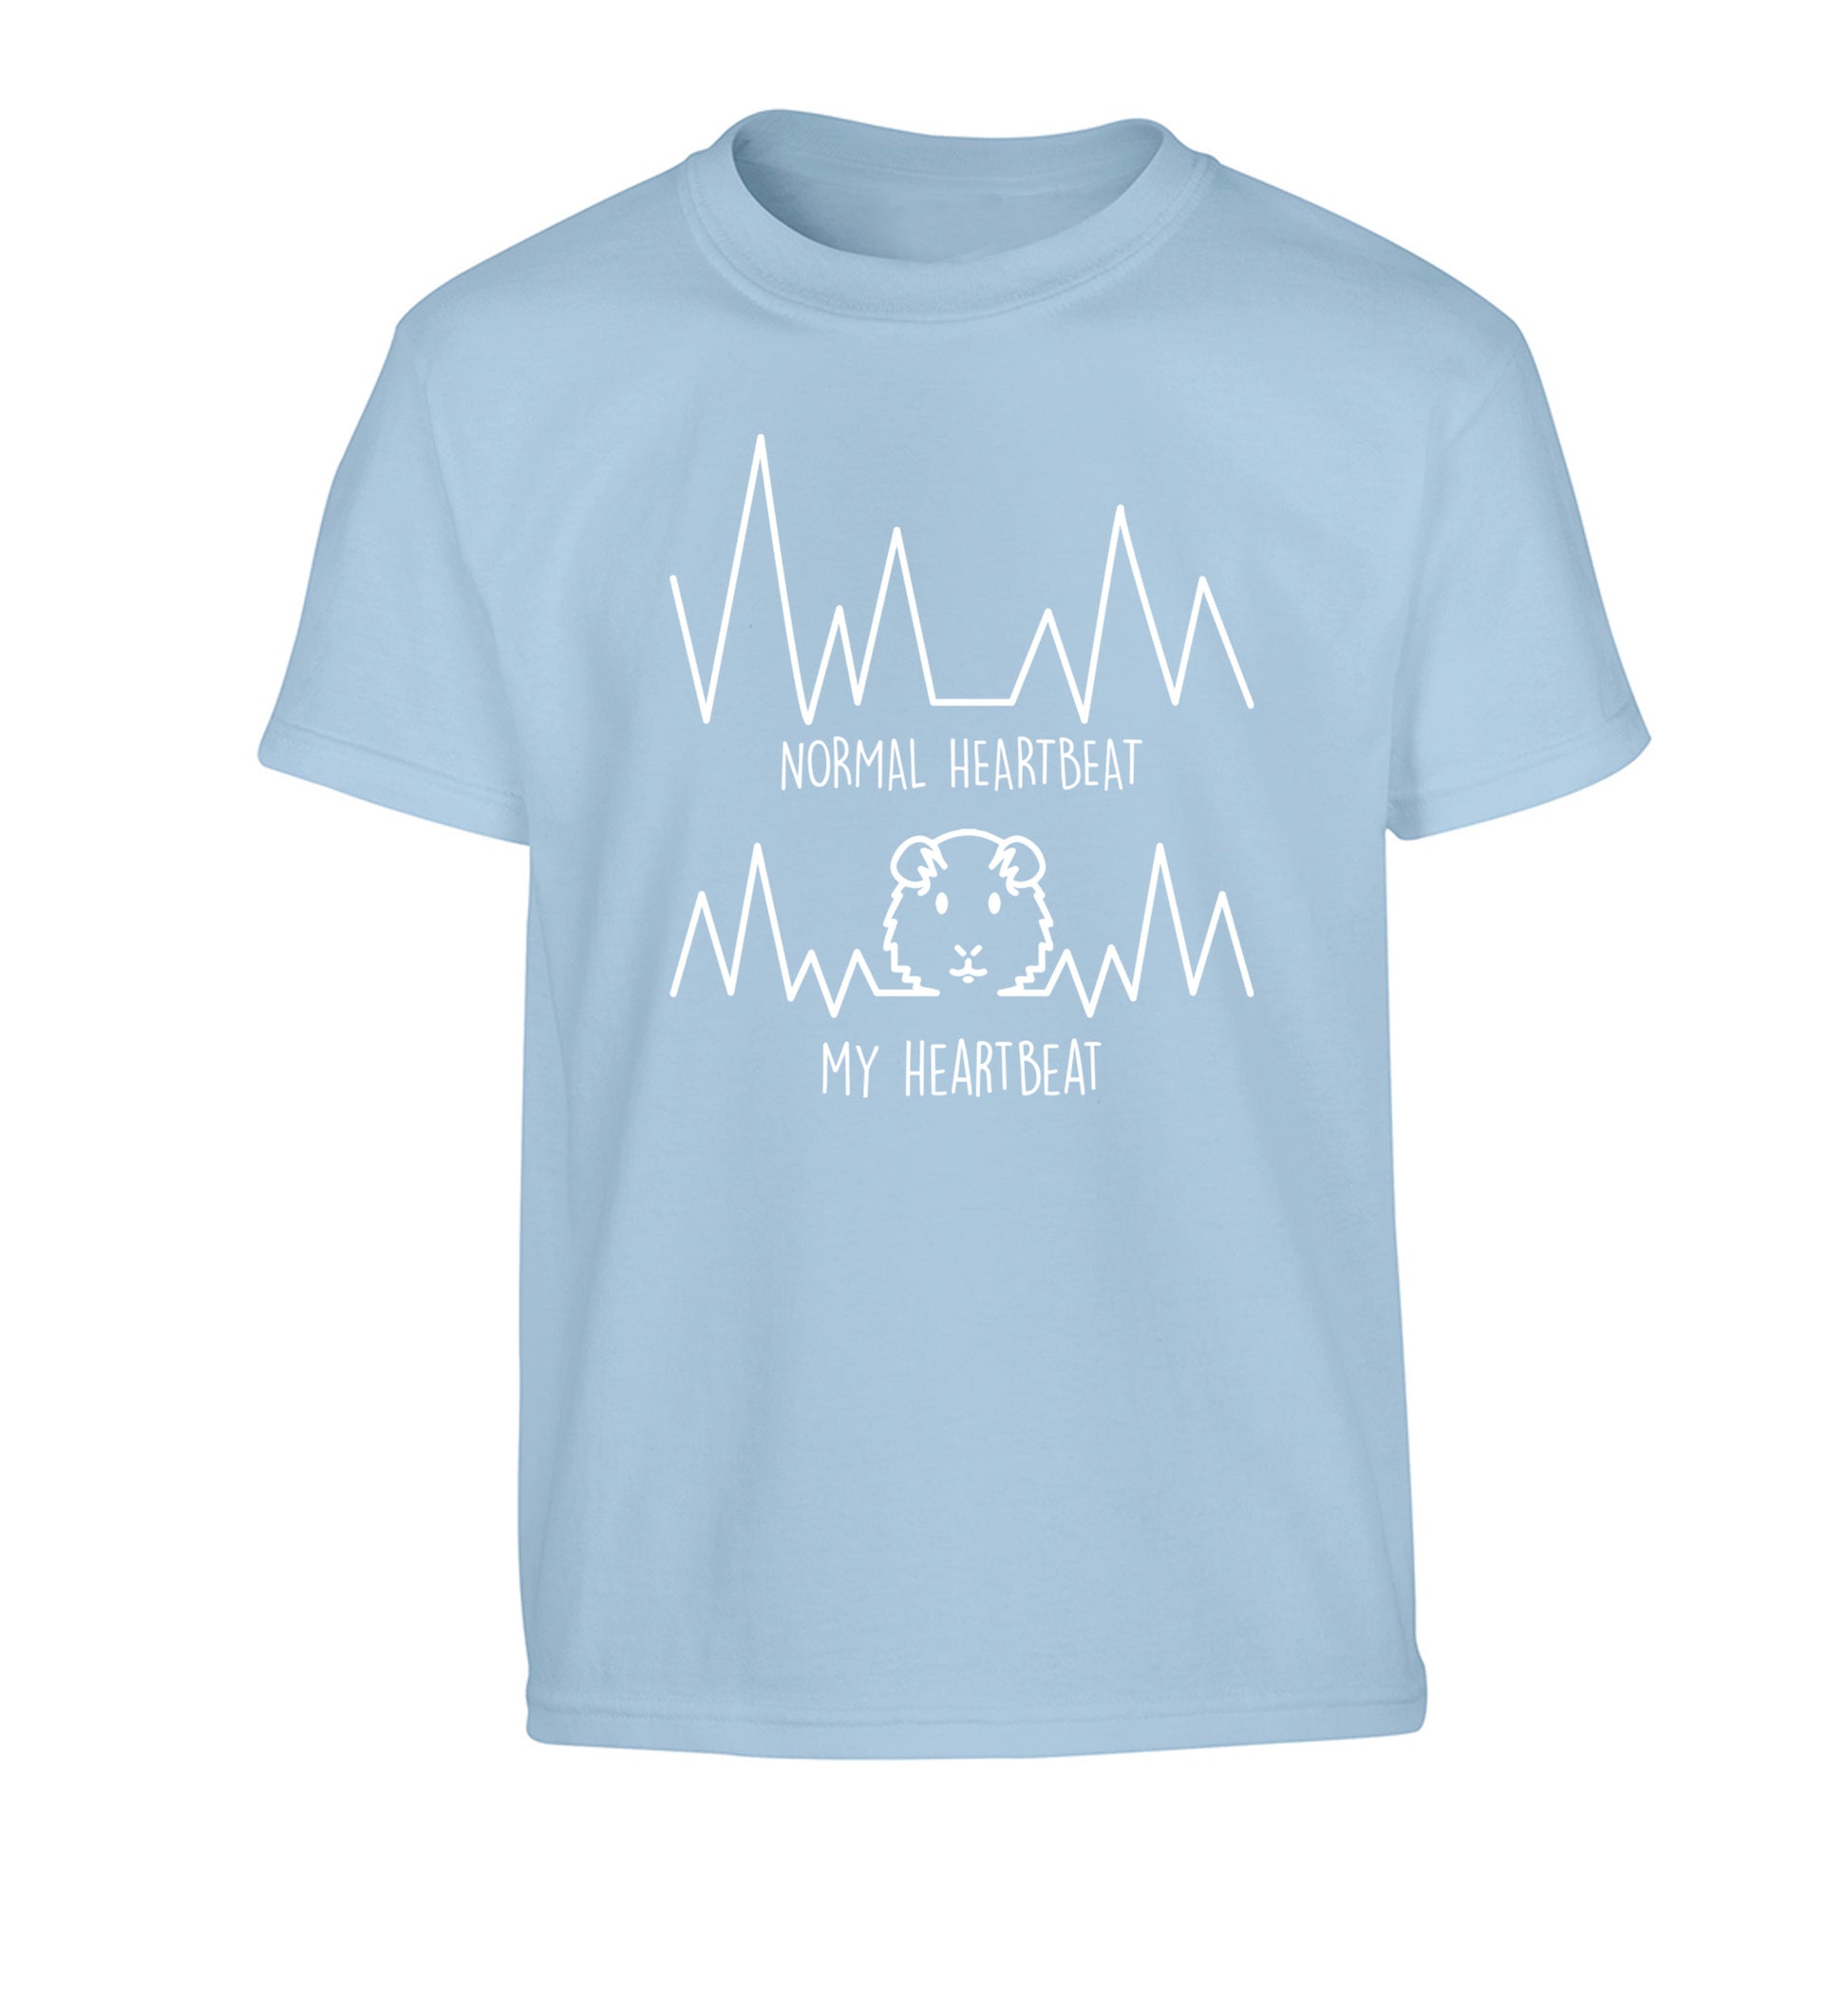 Normal heartbeat vs my heartbeat guinea pig lover Children's light blue Tshirt 12-14 Years